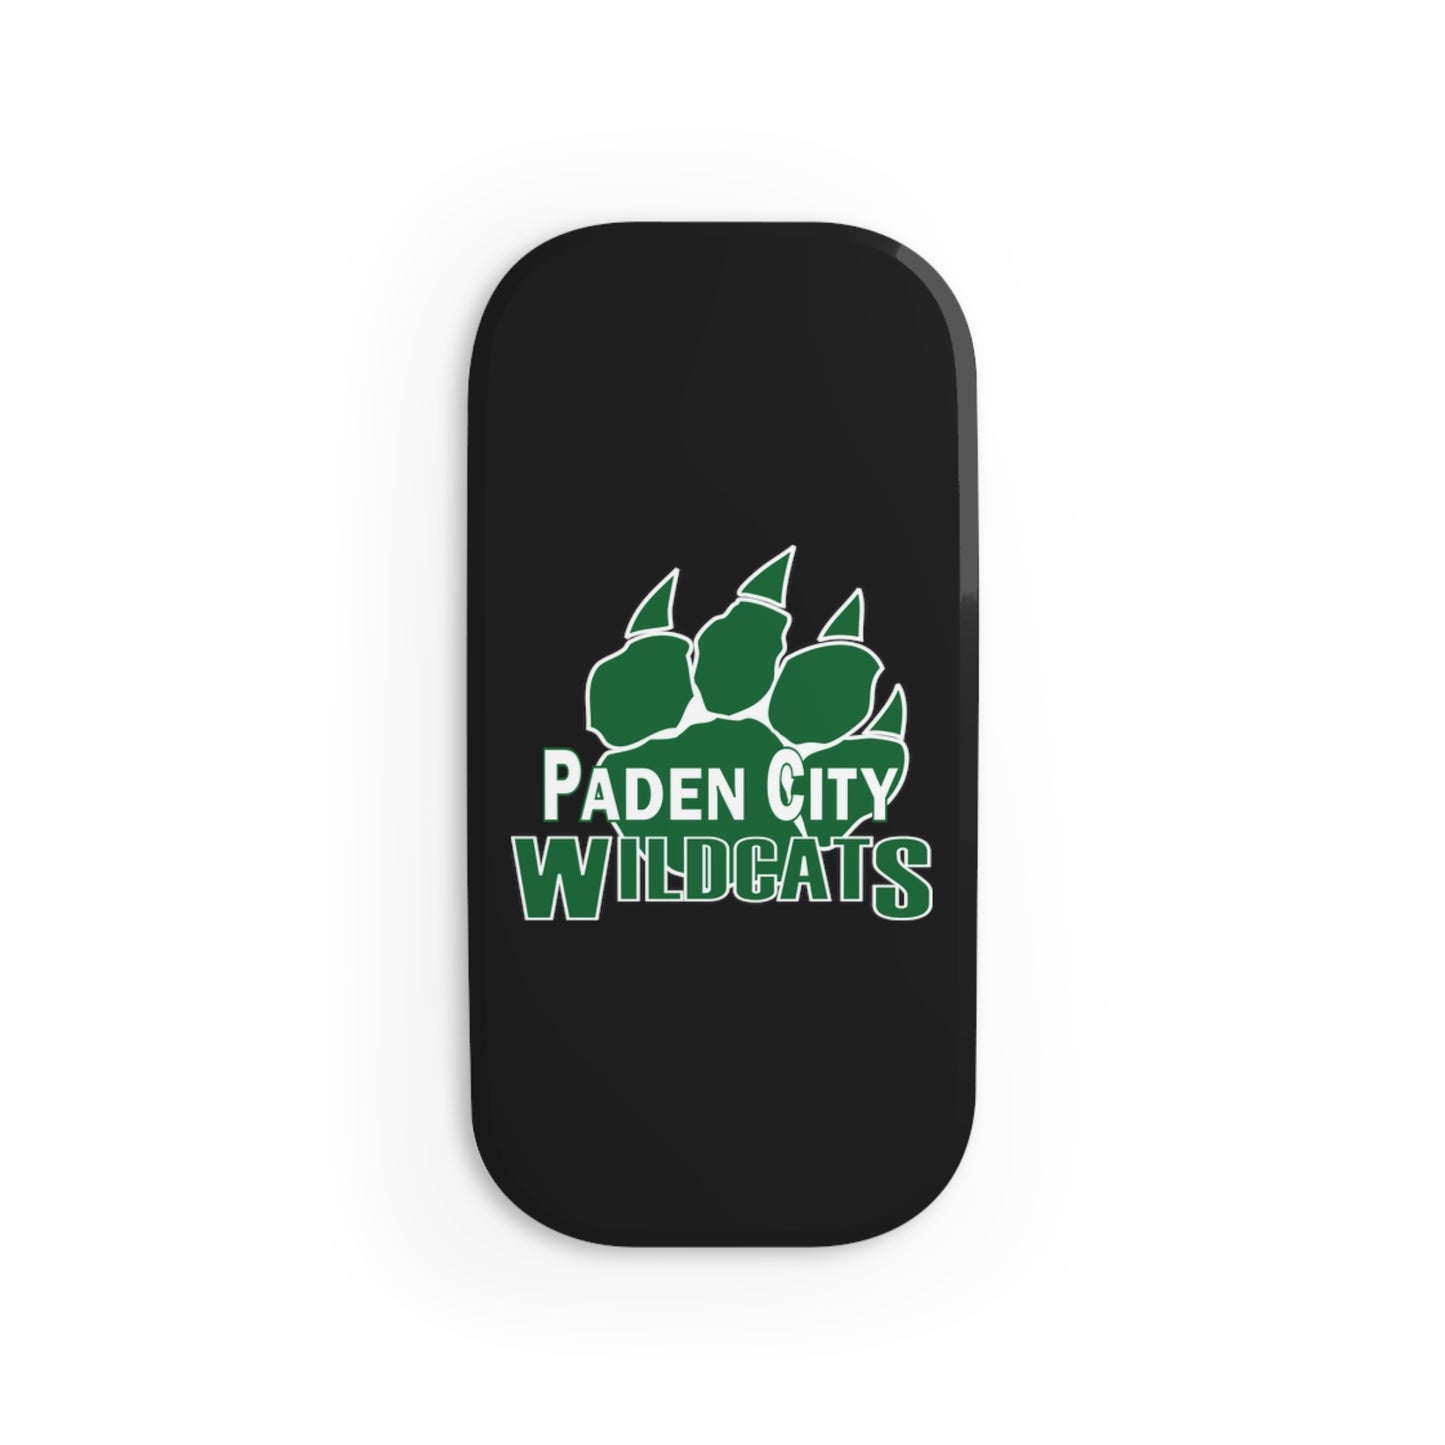 Phone Click-On Grip - Paden City